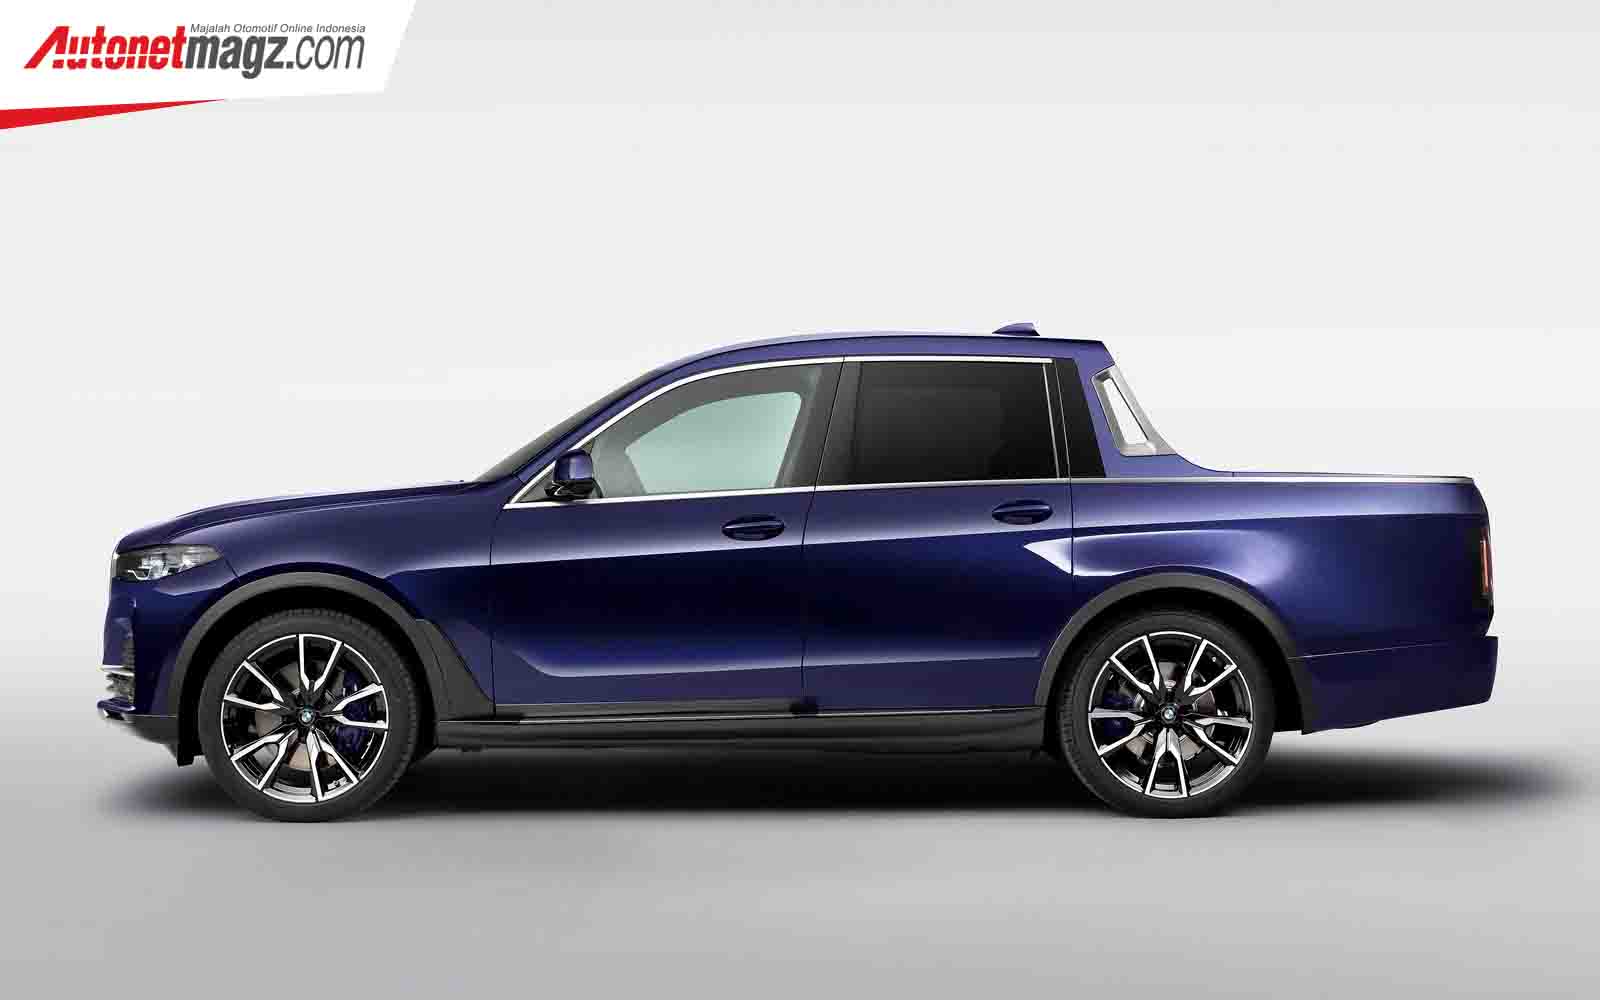 Berita, BMW X7 Pickup Concept samping: BMW X7 Pick-up Concept : Bisa Bawa Motor Di Bak belakang!